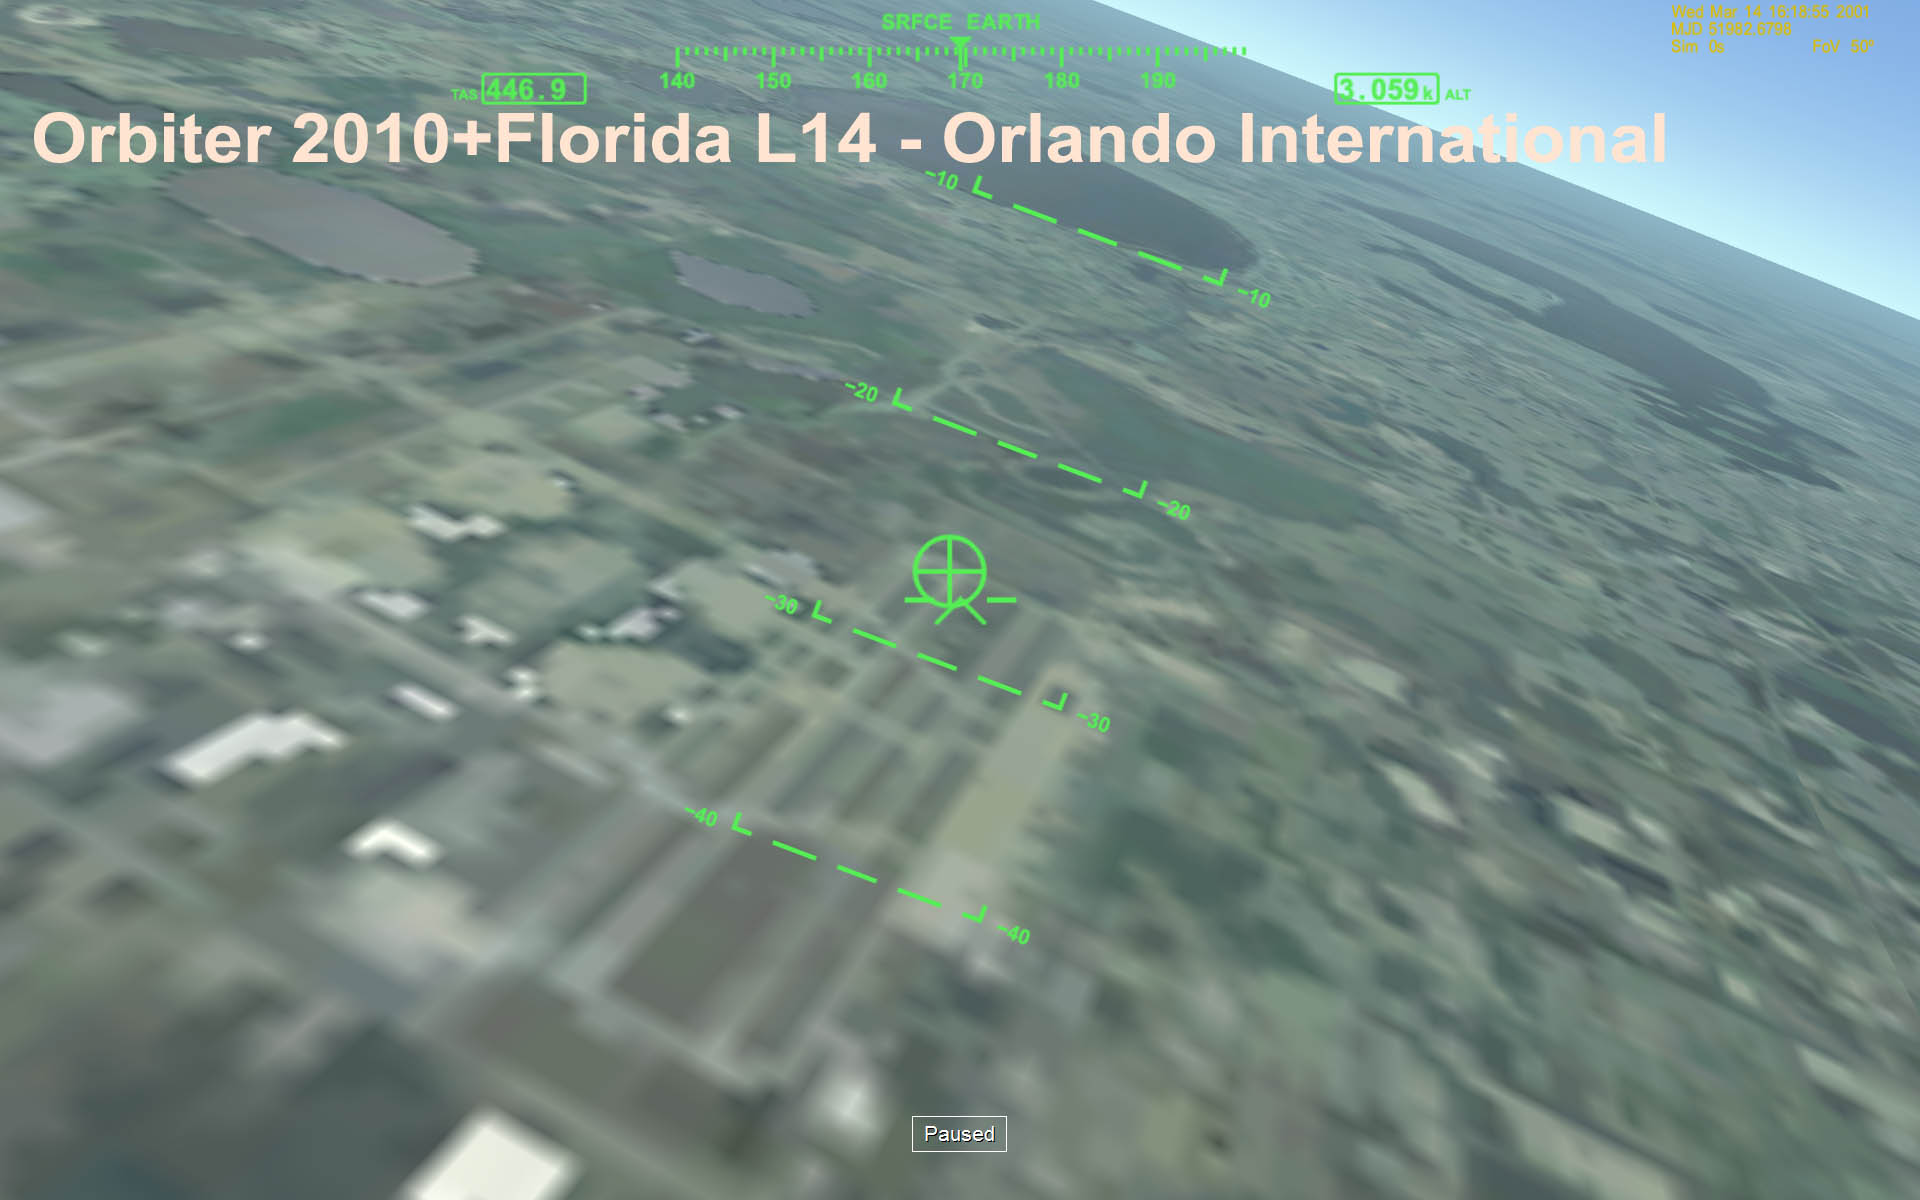 Orlando International: Orbiter 2010 with level 14 Florida.